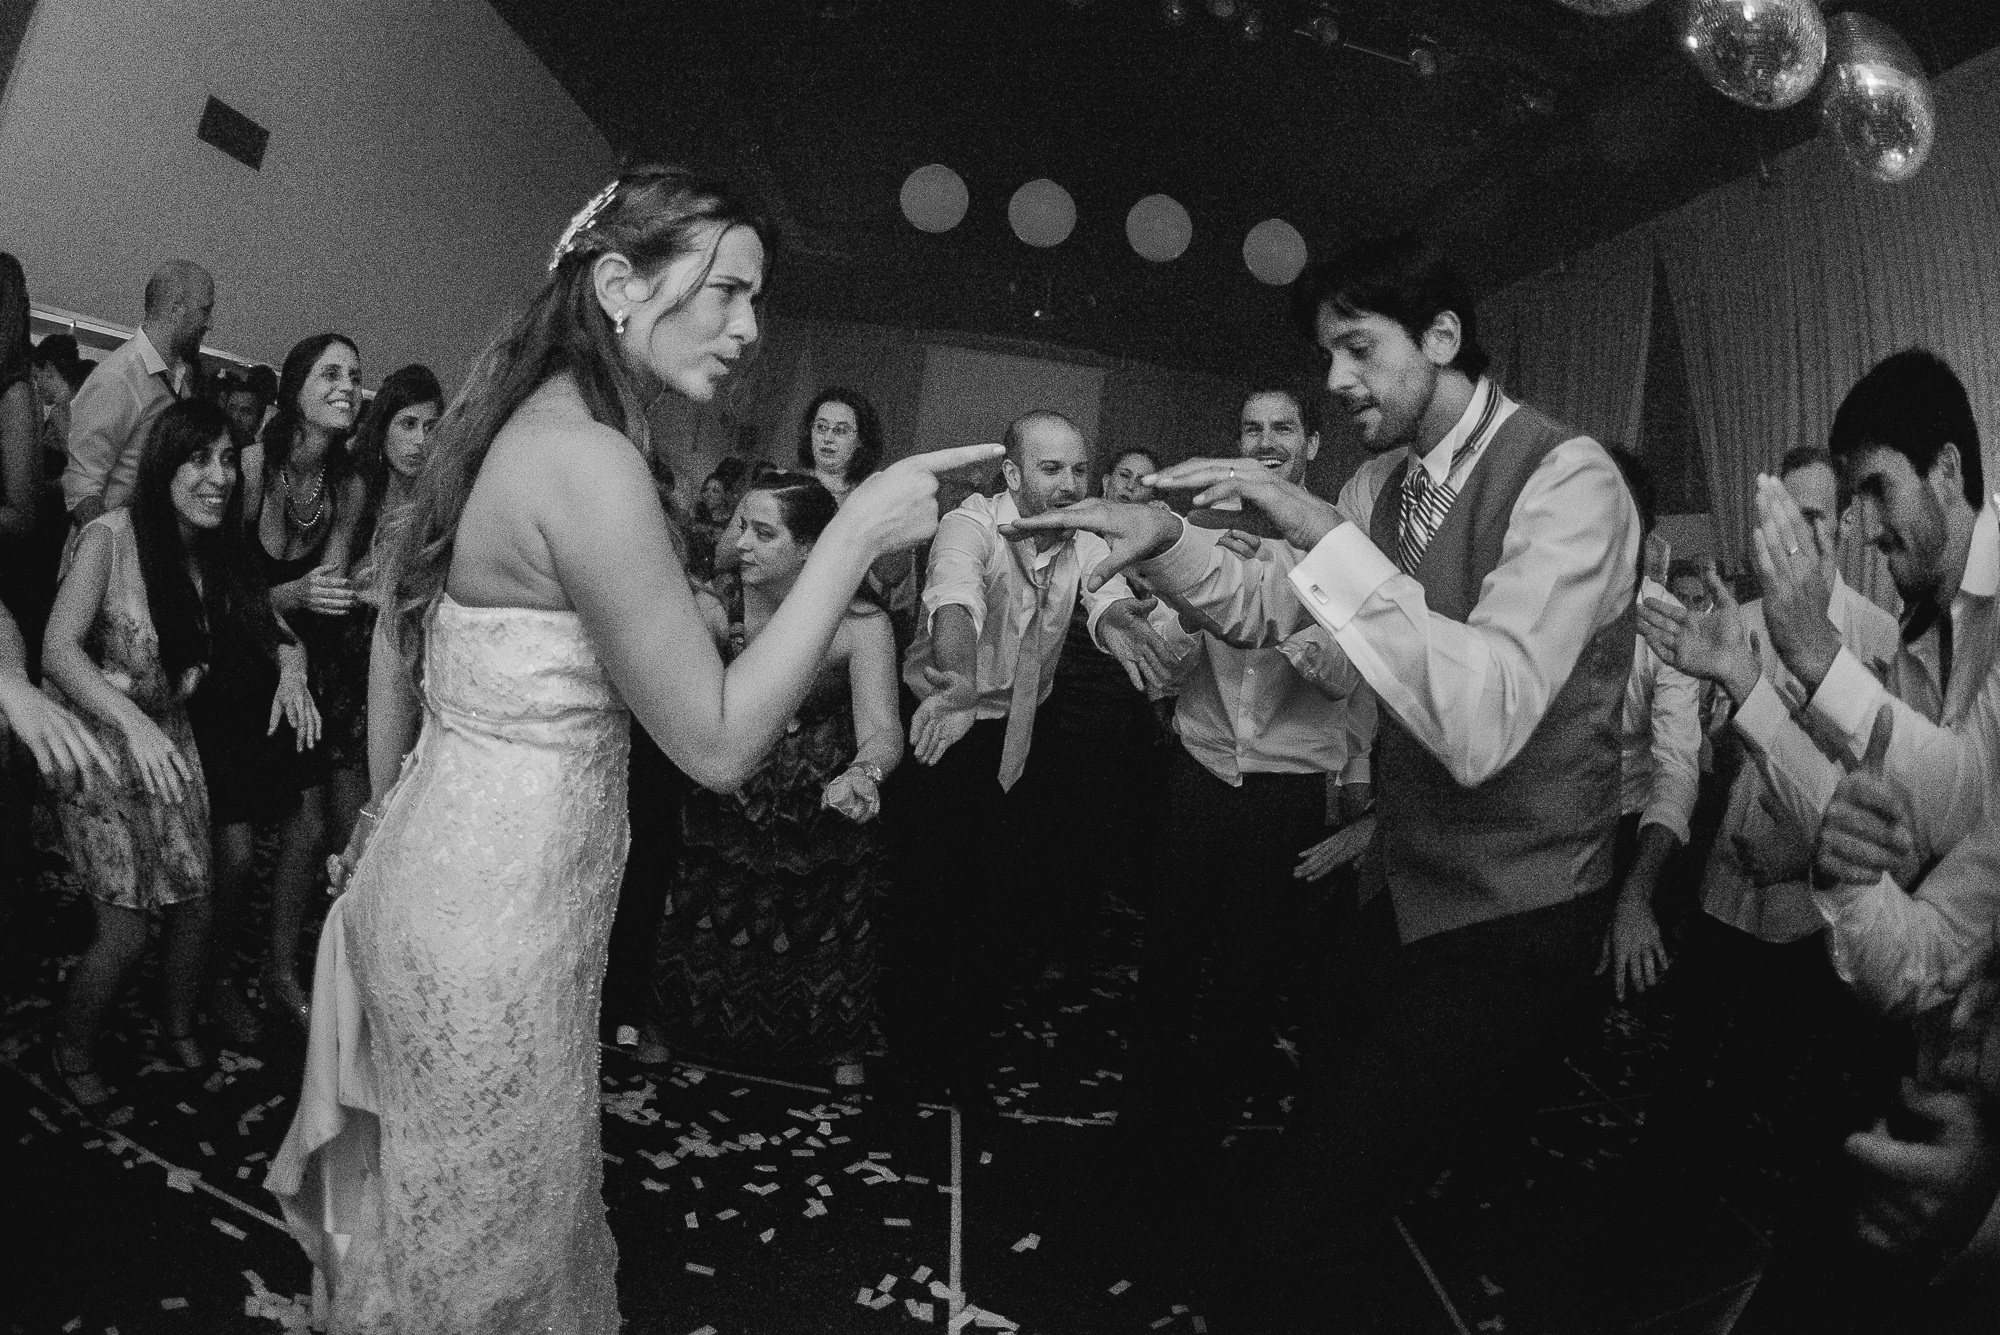 Gustavo Campos, Fotografo de bodas, Punto Bahia, fotografo casamiento buenos aires, fotoperiodismo de bodas, argentine wedding photography, gustavocampos.net, fotorreportaje de boda, Destination wedding photography